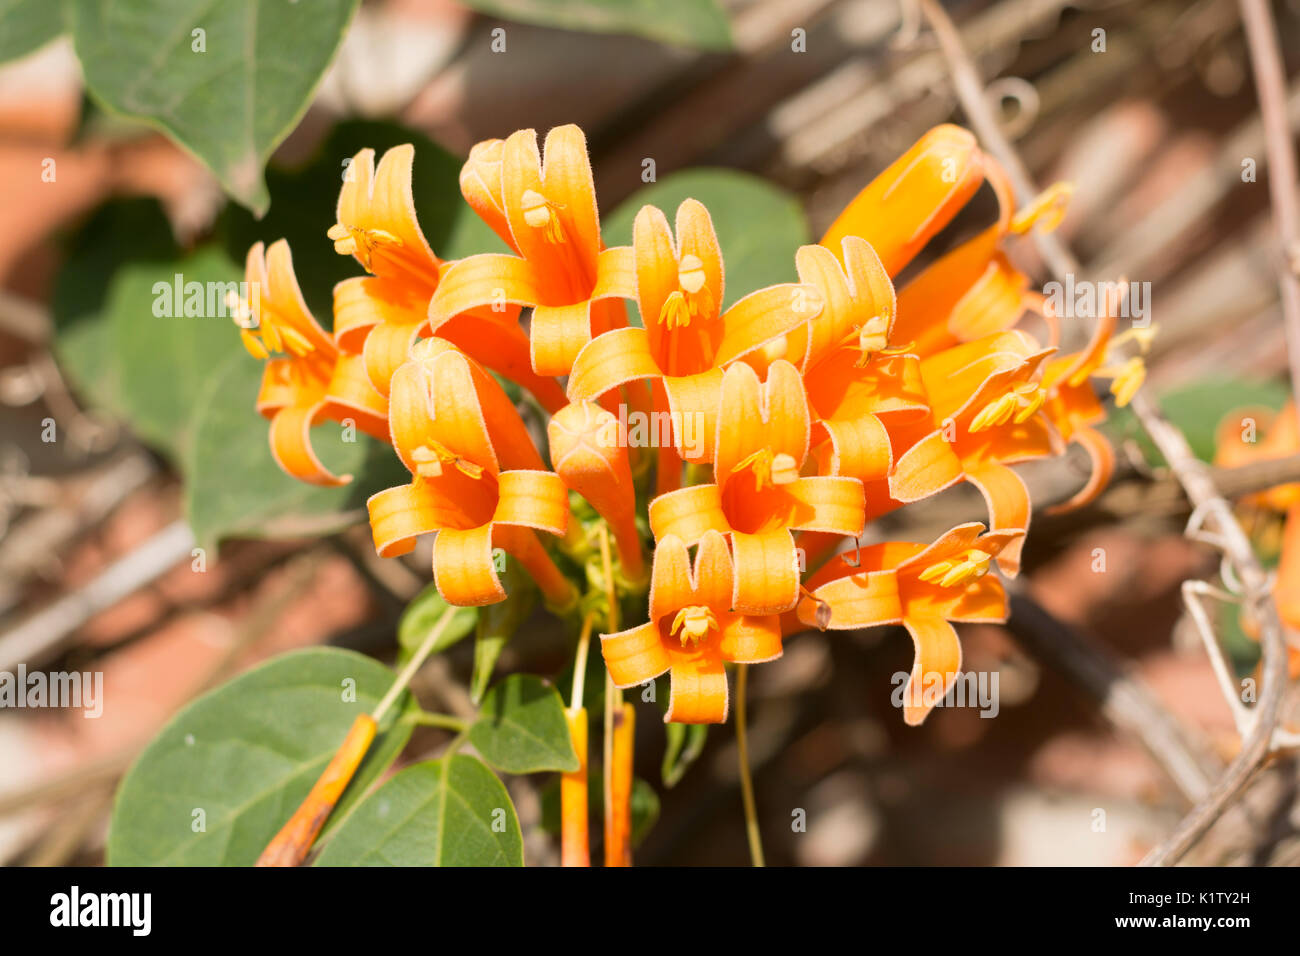 Flowering Pyrostegia venusta, commonly known as flame vine, orange trumpet vine, golden shower. Argentina, South America Stock Photo